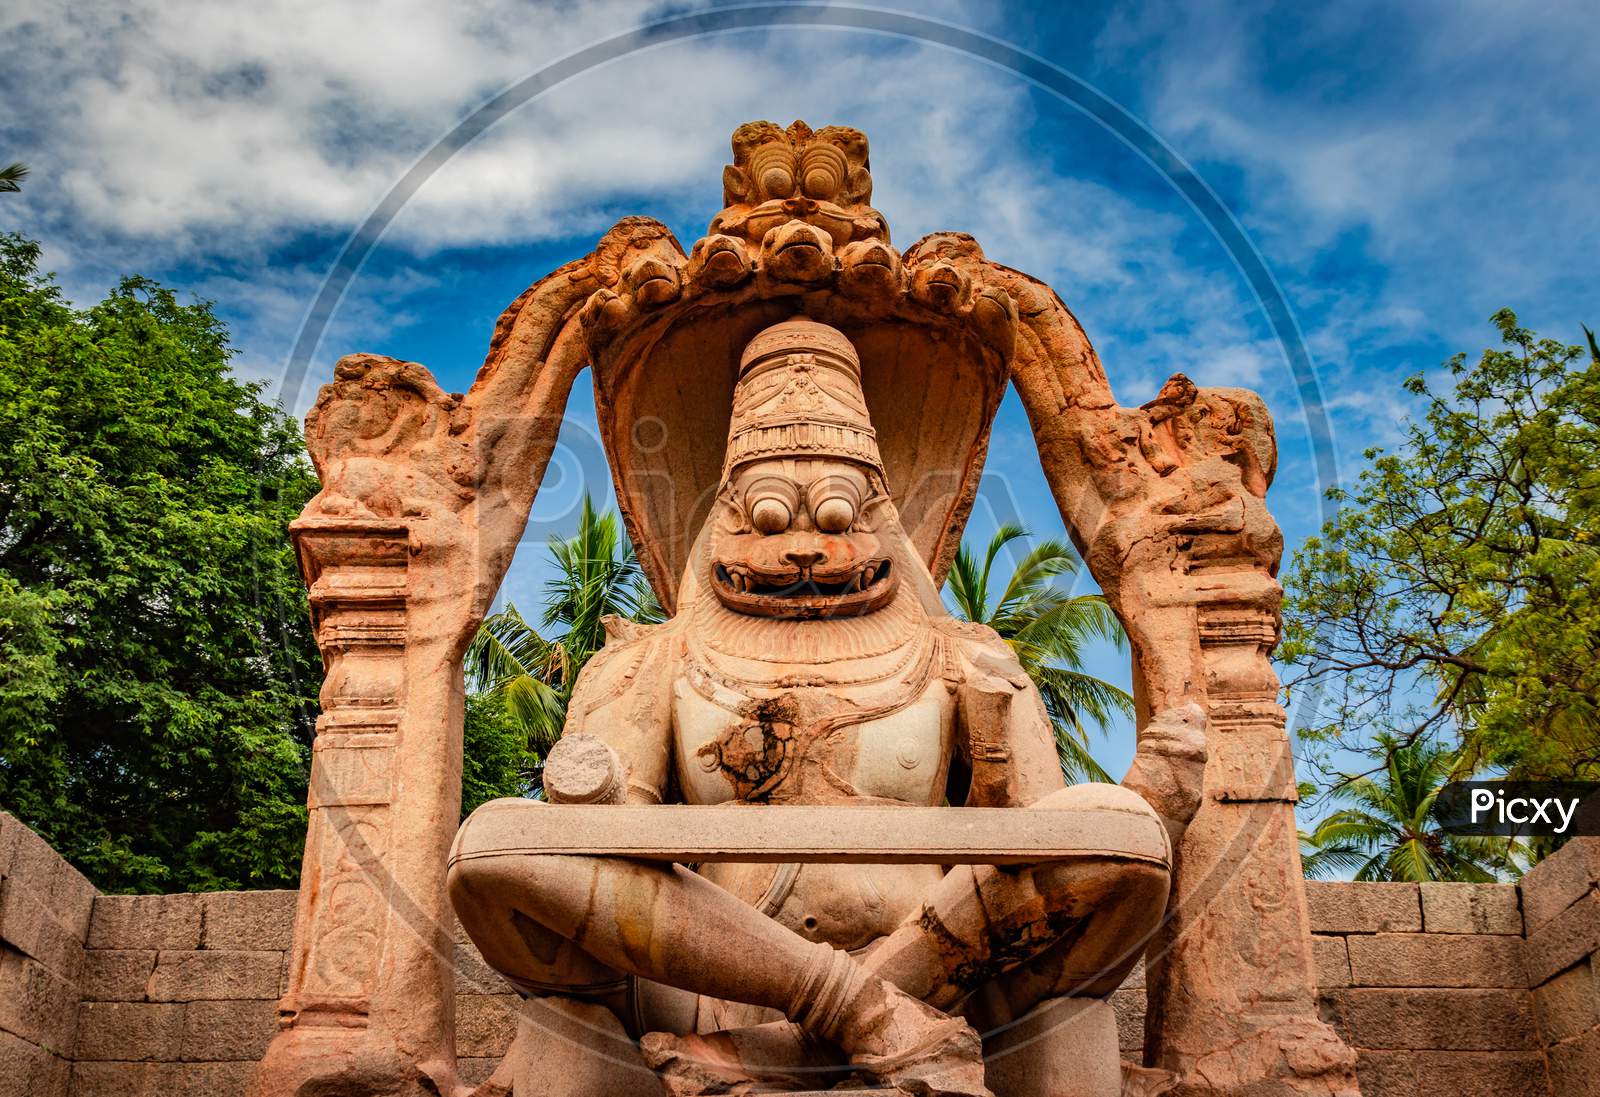 Narasimha Lakshmi Temple Hampi Antique Stone Art Close Up Shot From Unique Angle With Amazing Sky